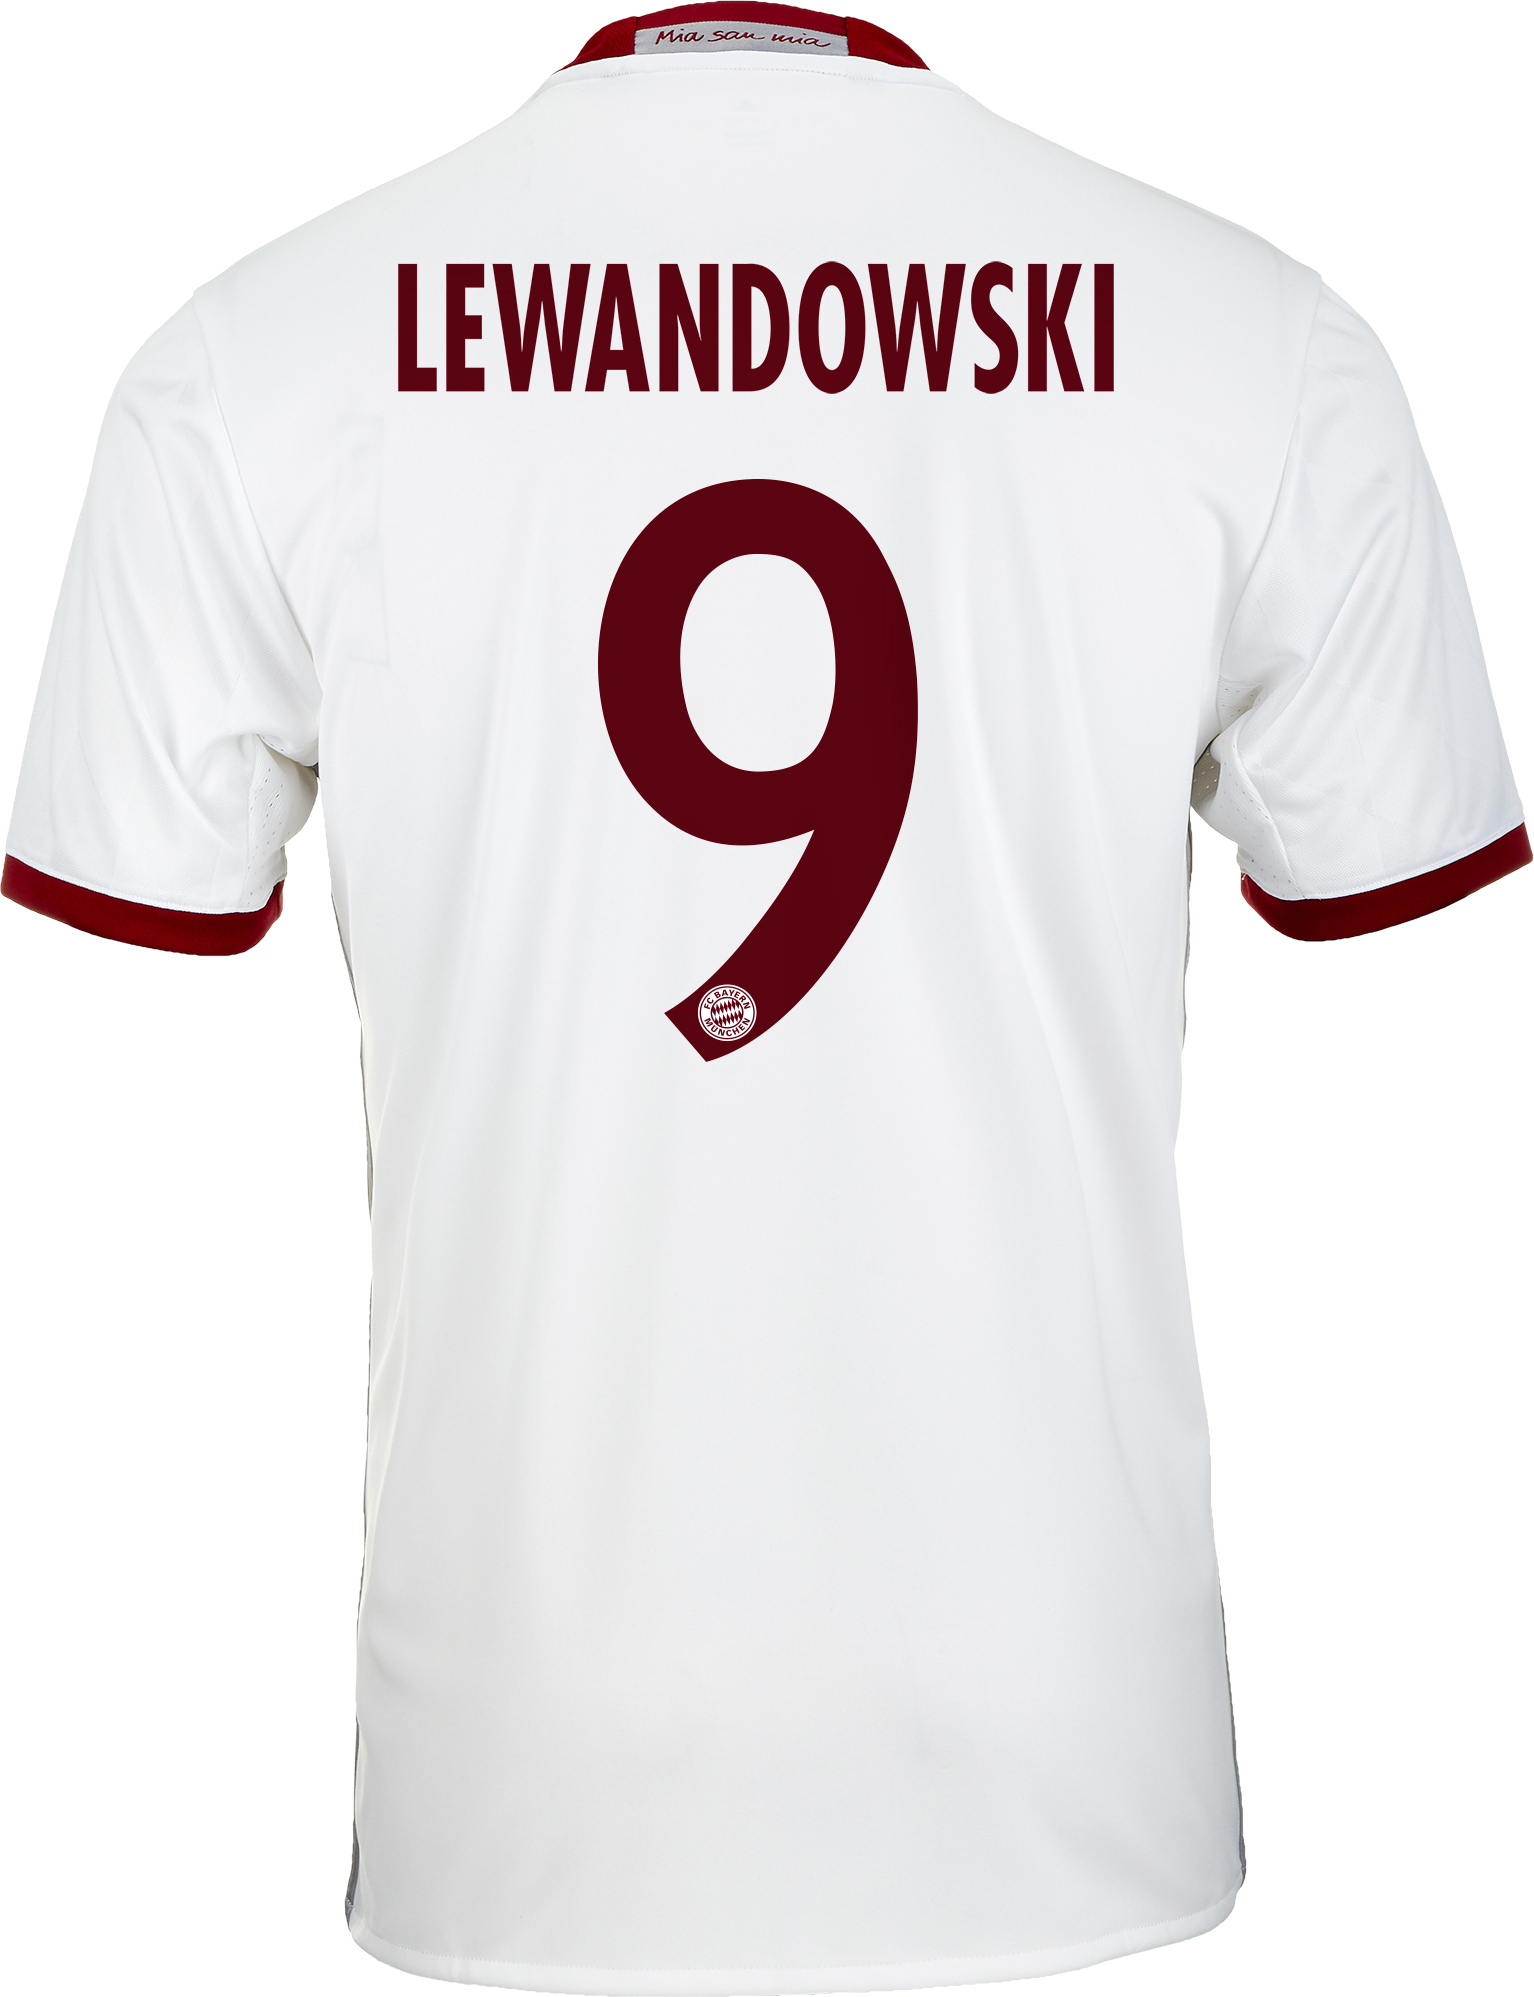 Hectares Comparison Doctor adidas Lewandowski Bayern Munich Jersey - 2016 Bayern Munich Jerseys